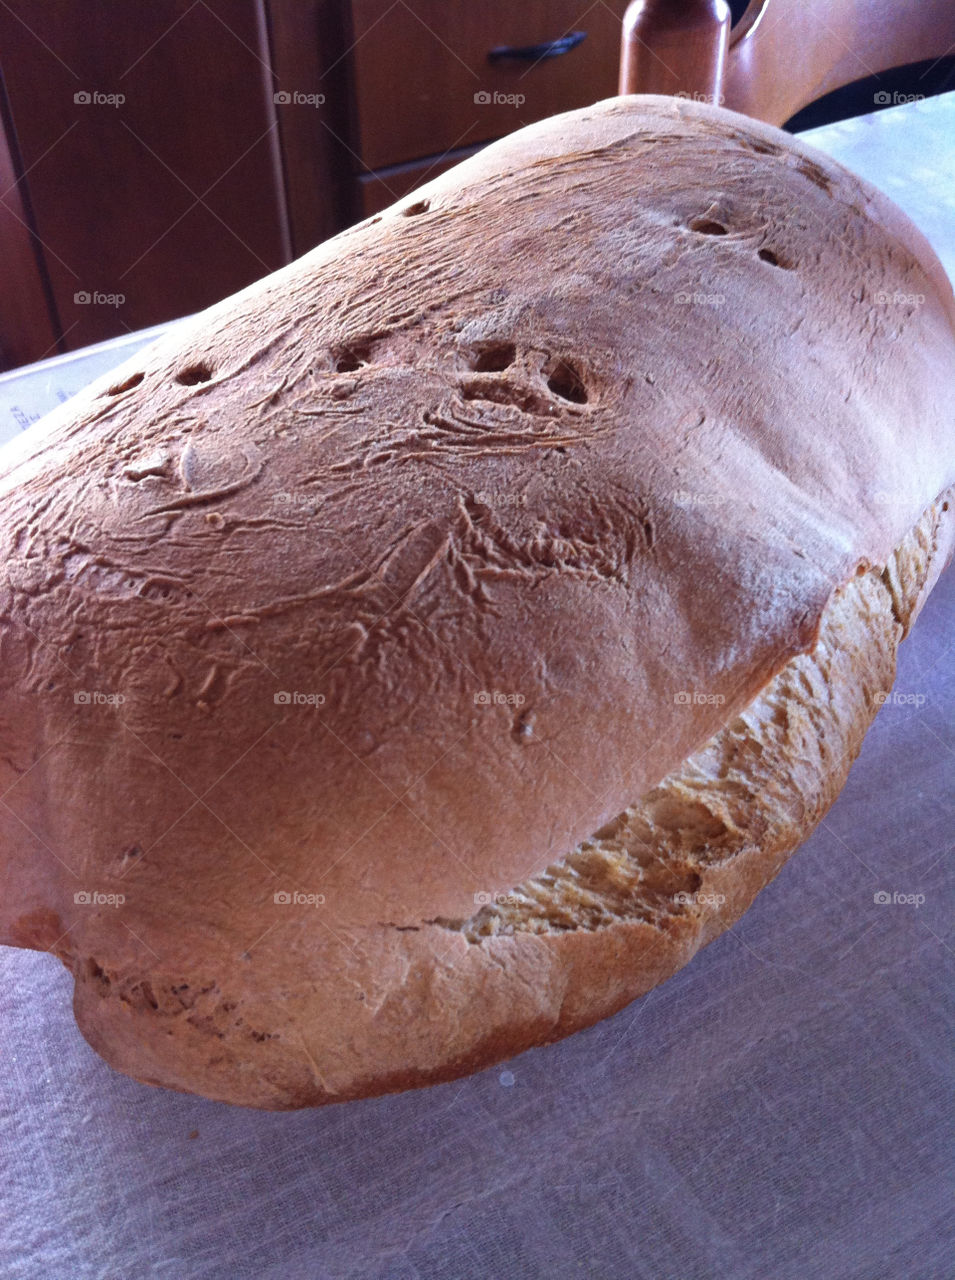 bread hot fresh village by kaliar